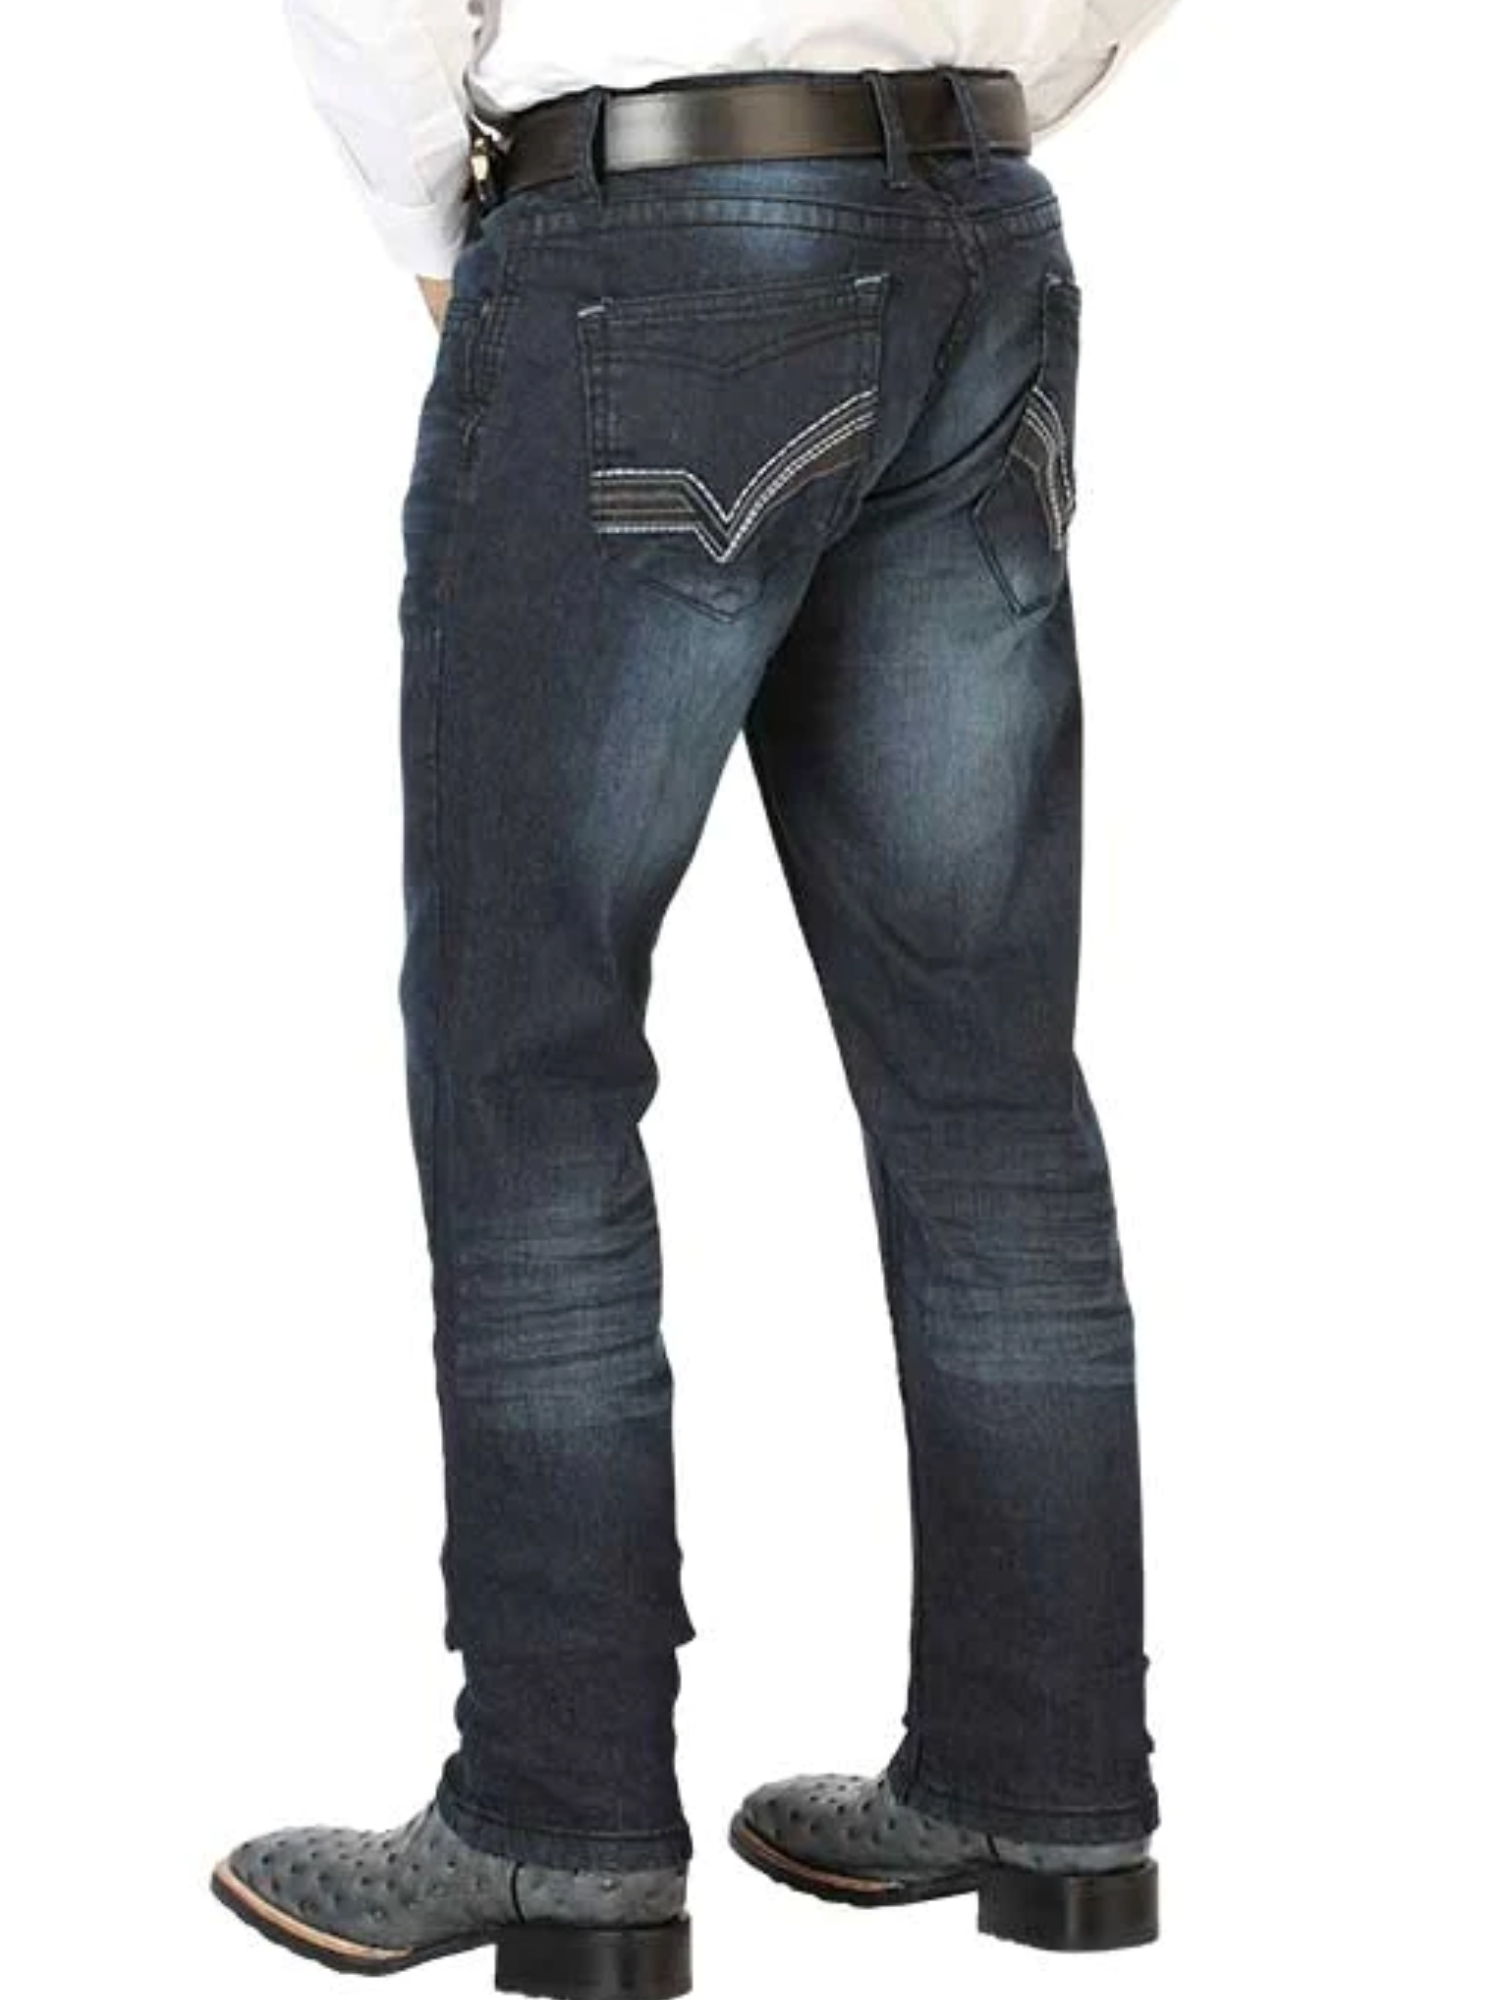 Pantalon De Mezclilla Casual Para Hombre 'El Norteño' *Azul Oscuro-126633*  - BELLEZA'S